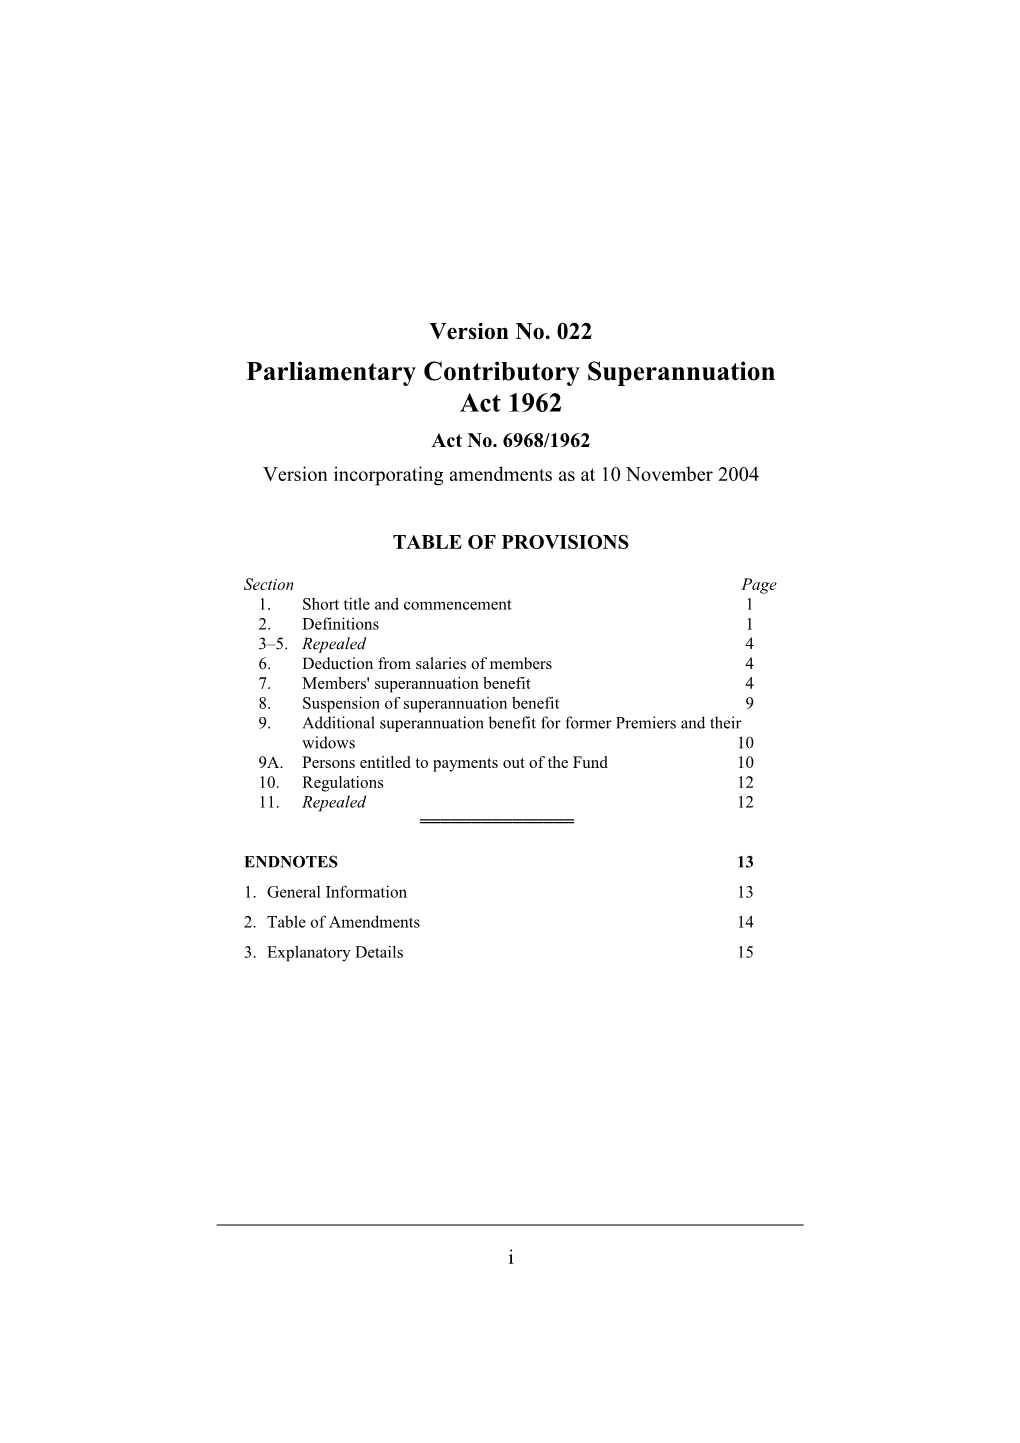 Parliamentary Contributory Superannuation Act 1962